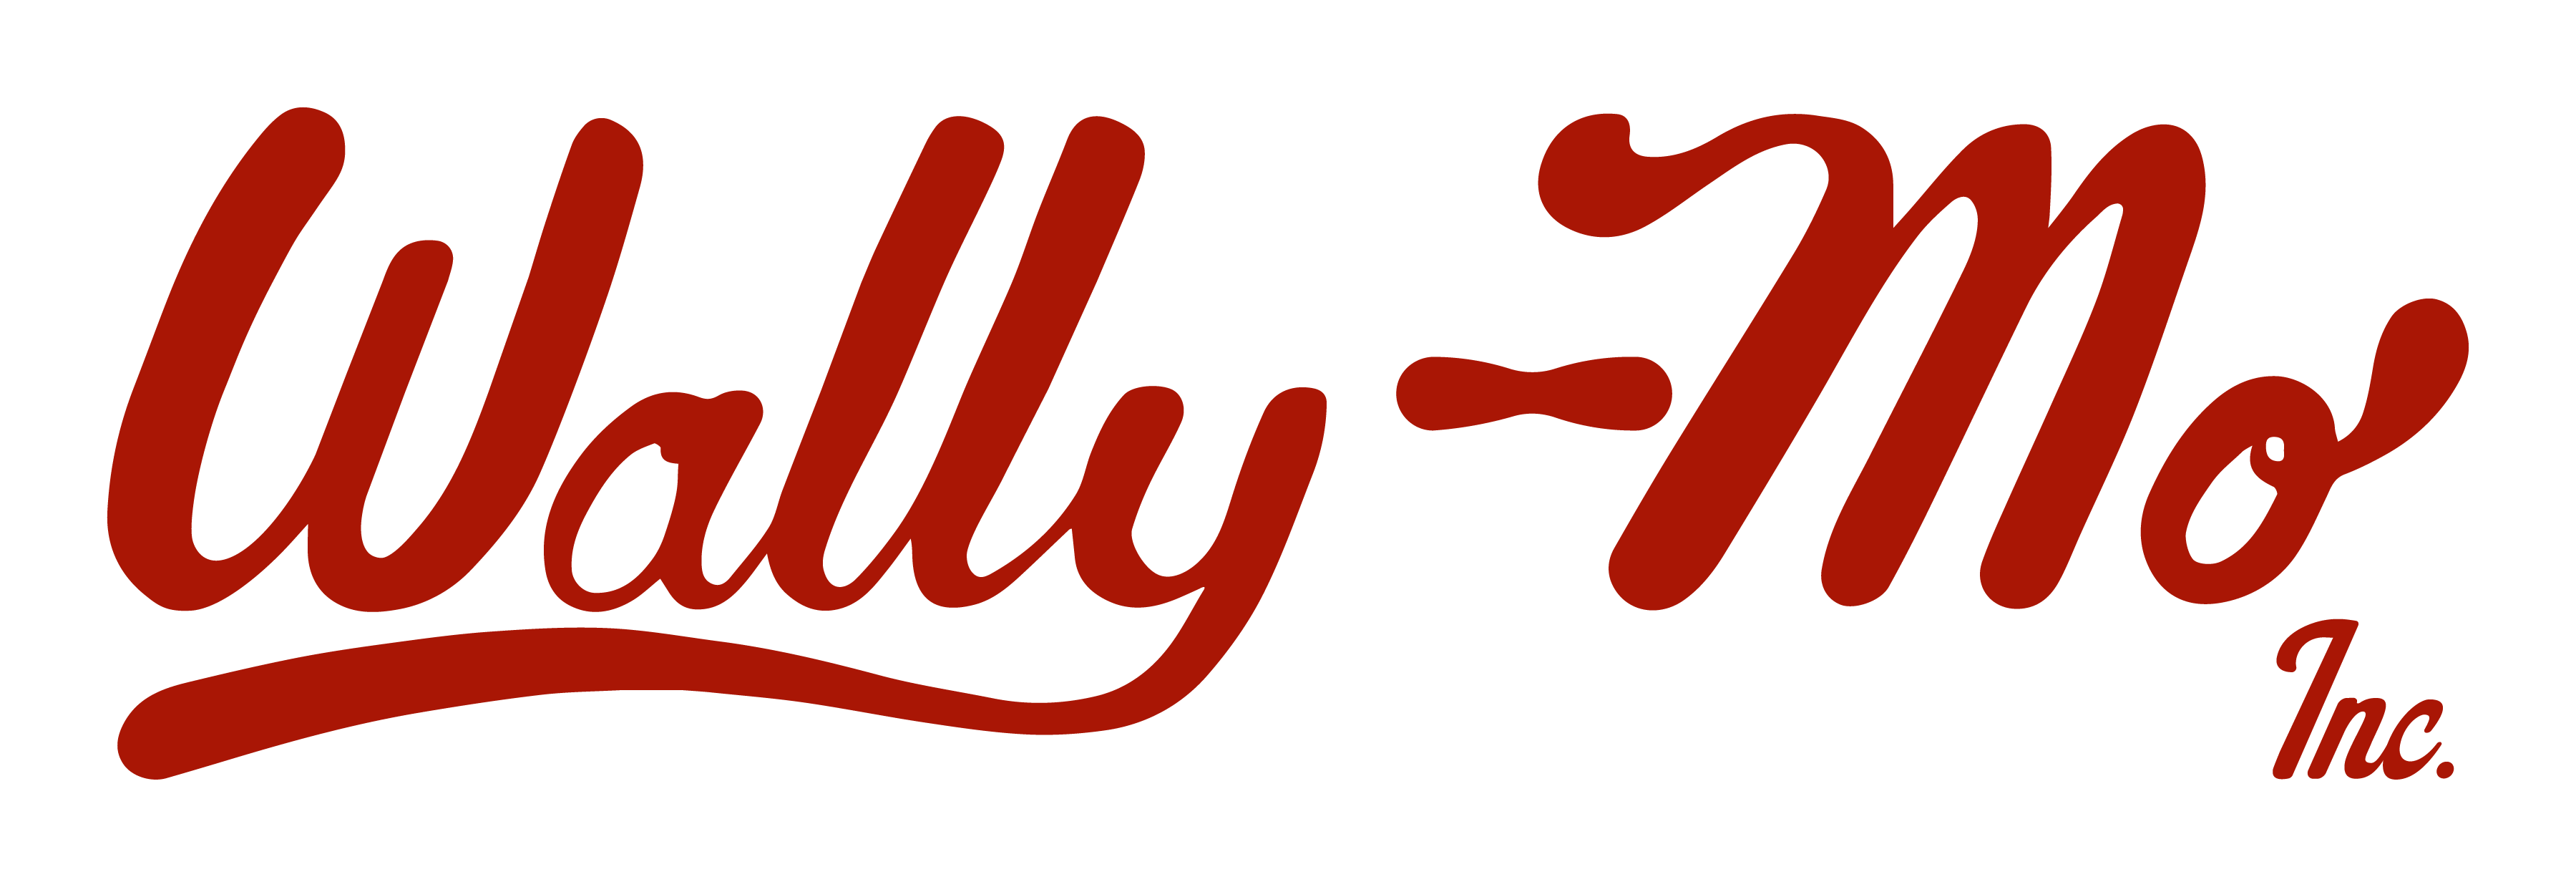 Wally-Mo Inc. logo